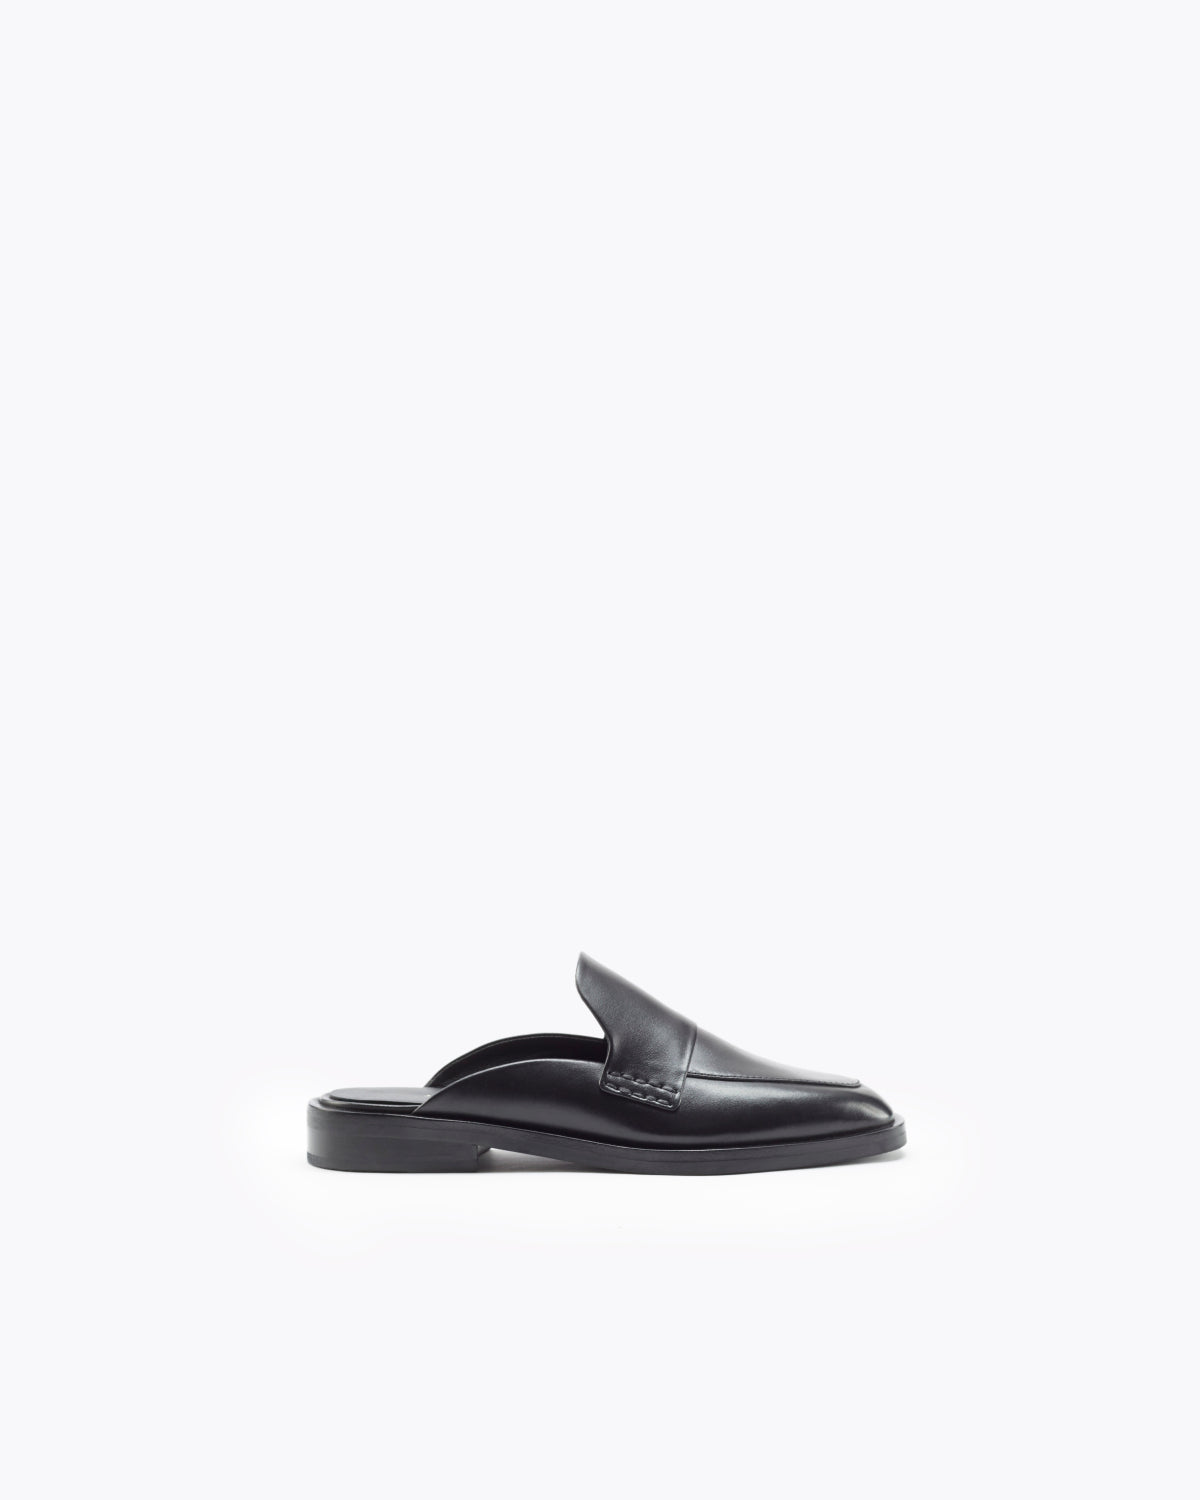 Women's Designer Shoes - Flats & Loafers | 3.1 Phillip Lim